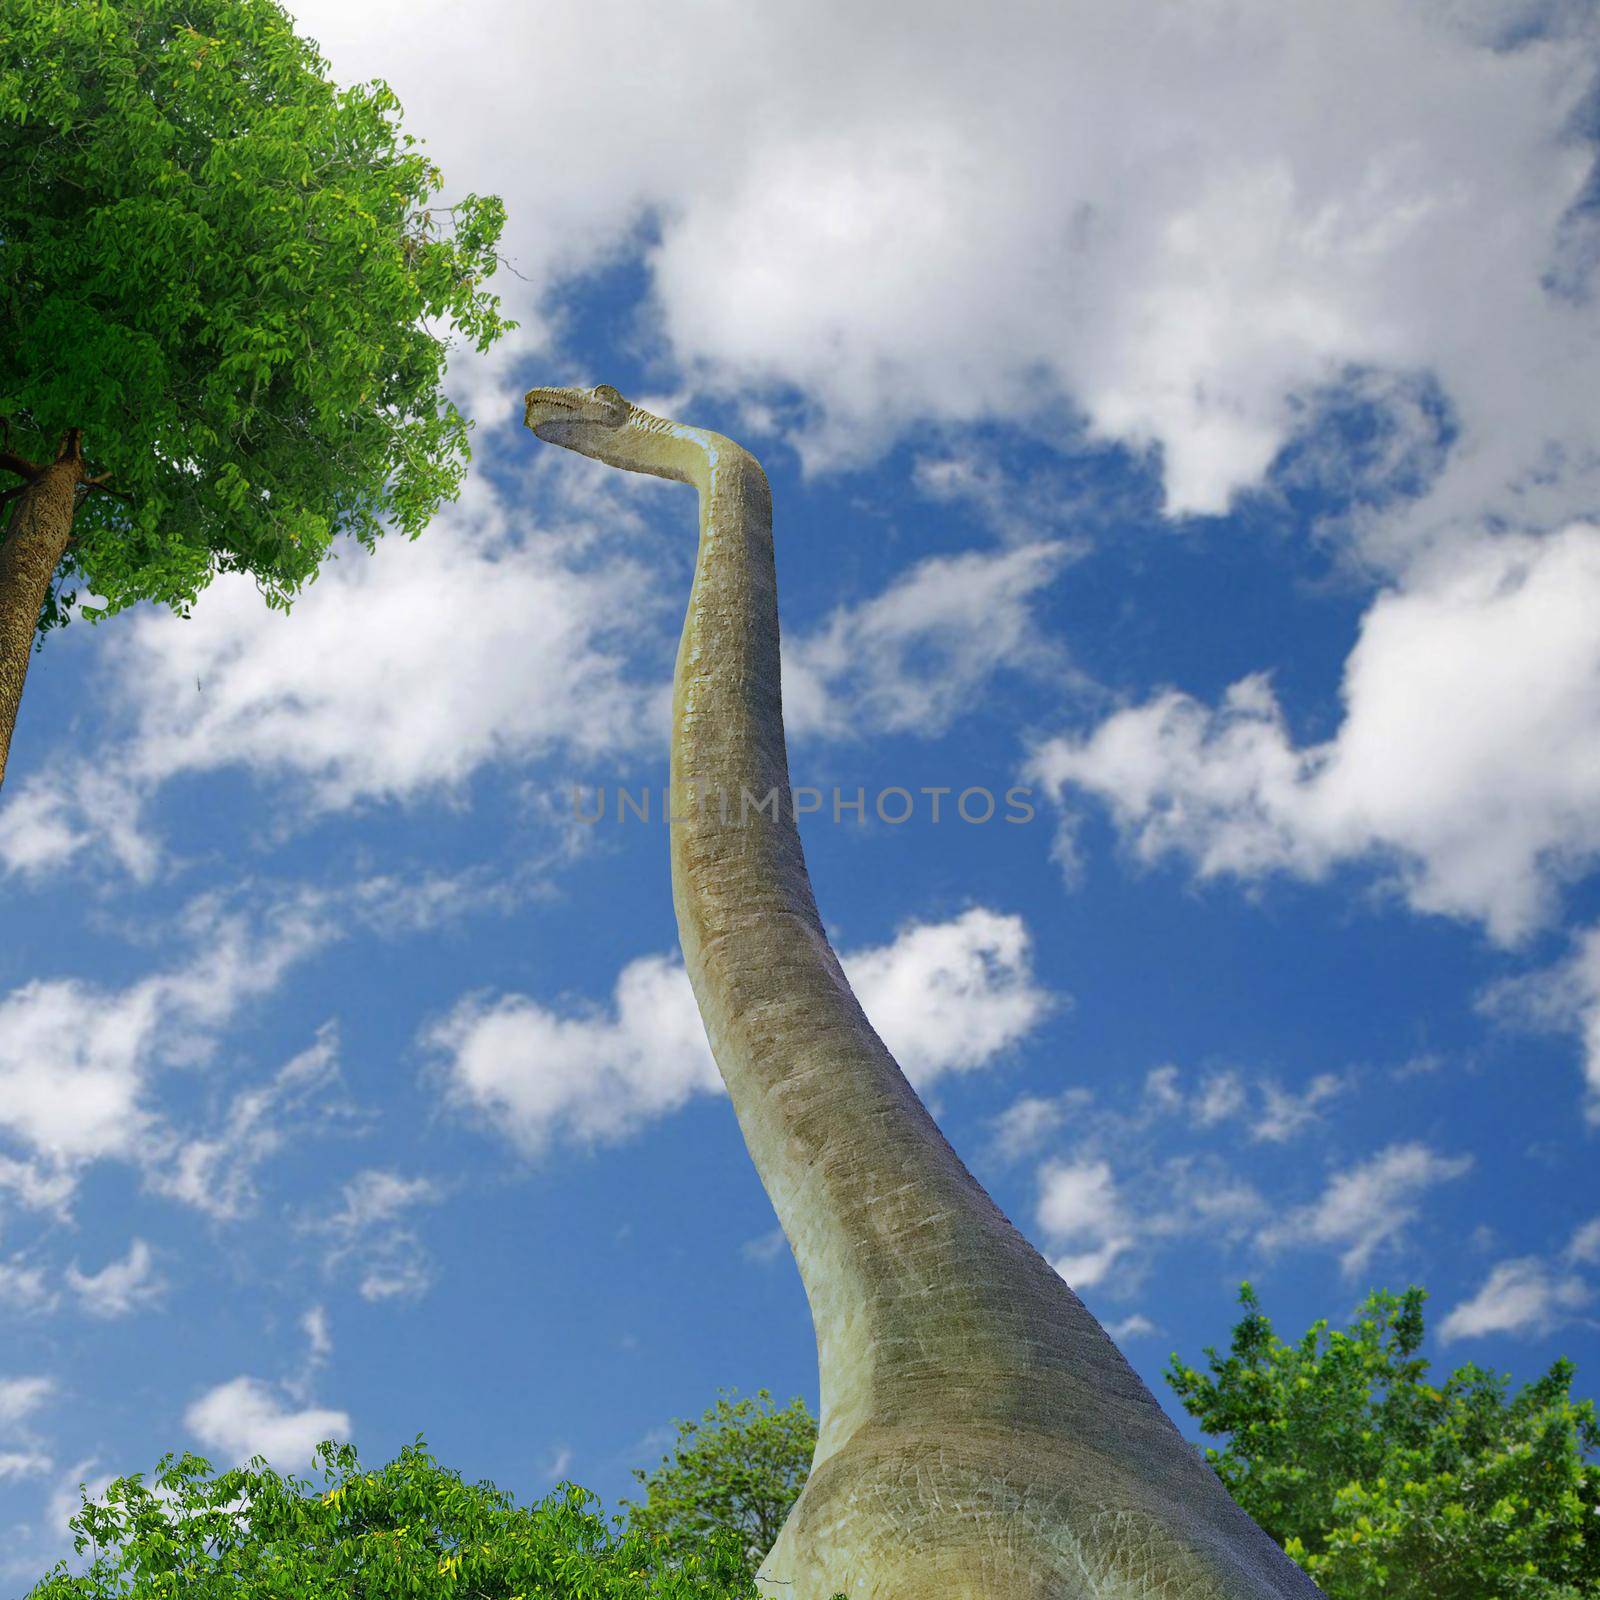 Dinosaur live image